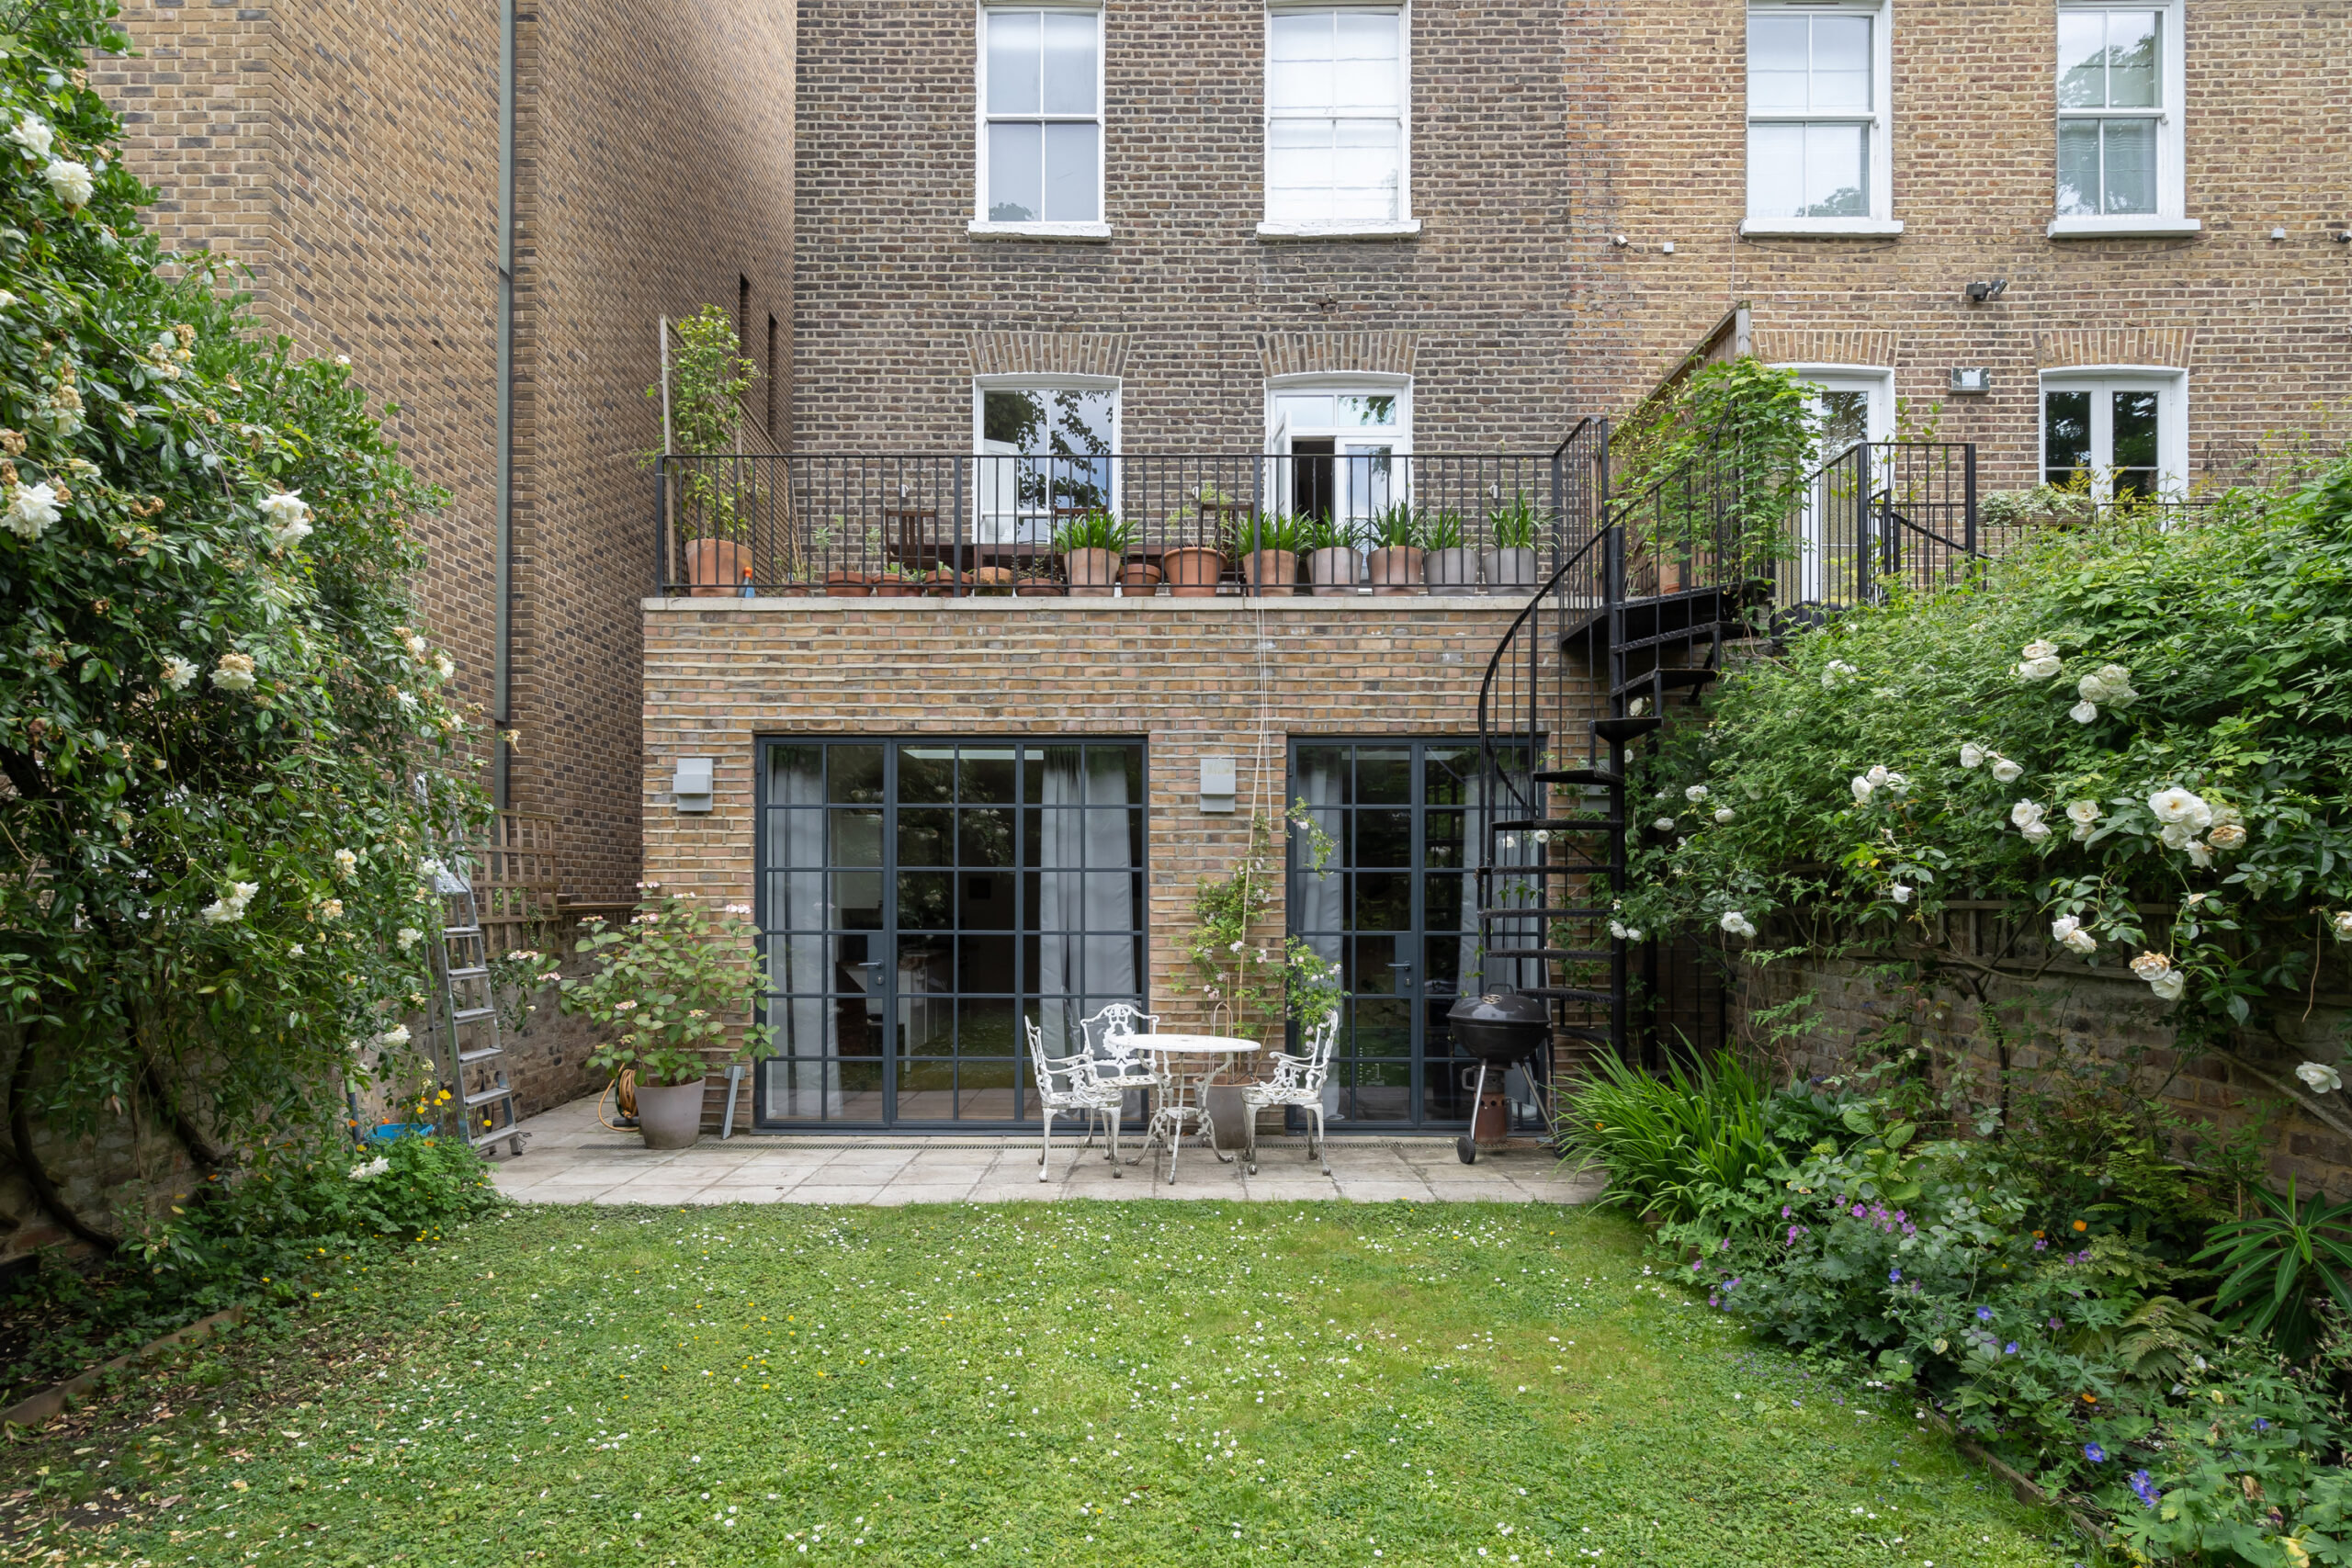 For Sale: Leamington Road villas Notting Hill W11 garden lawn